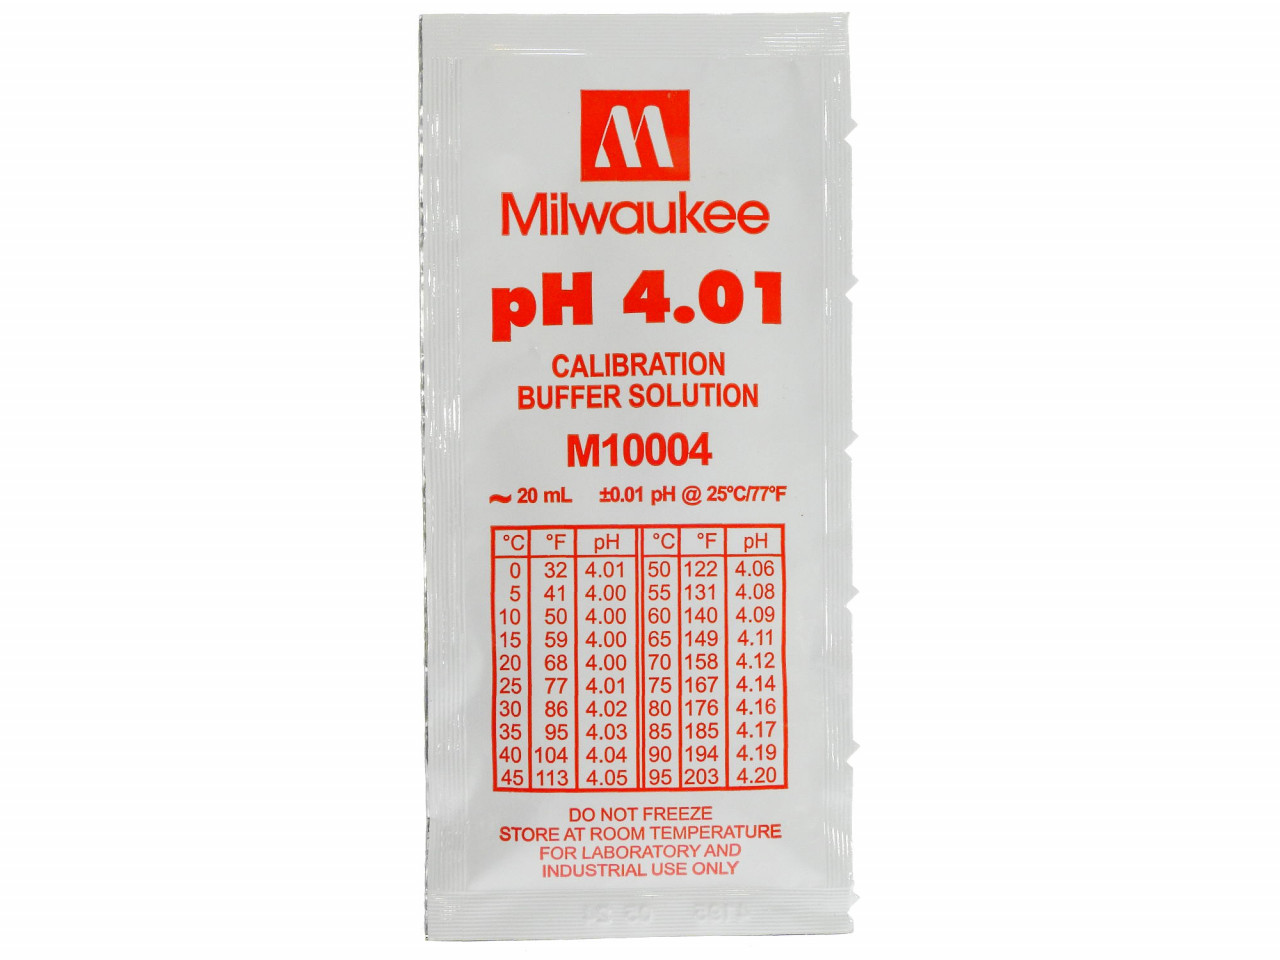 Milwaukee - pH Meter buffer solution 4.01 M10004